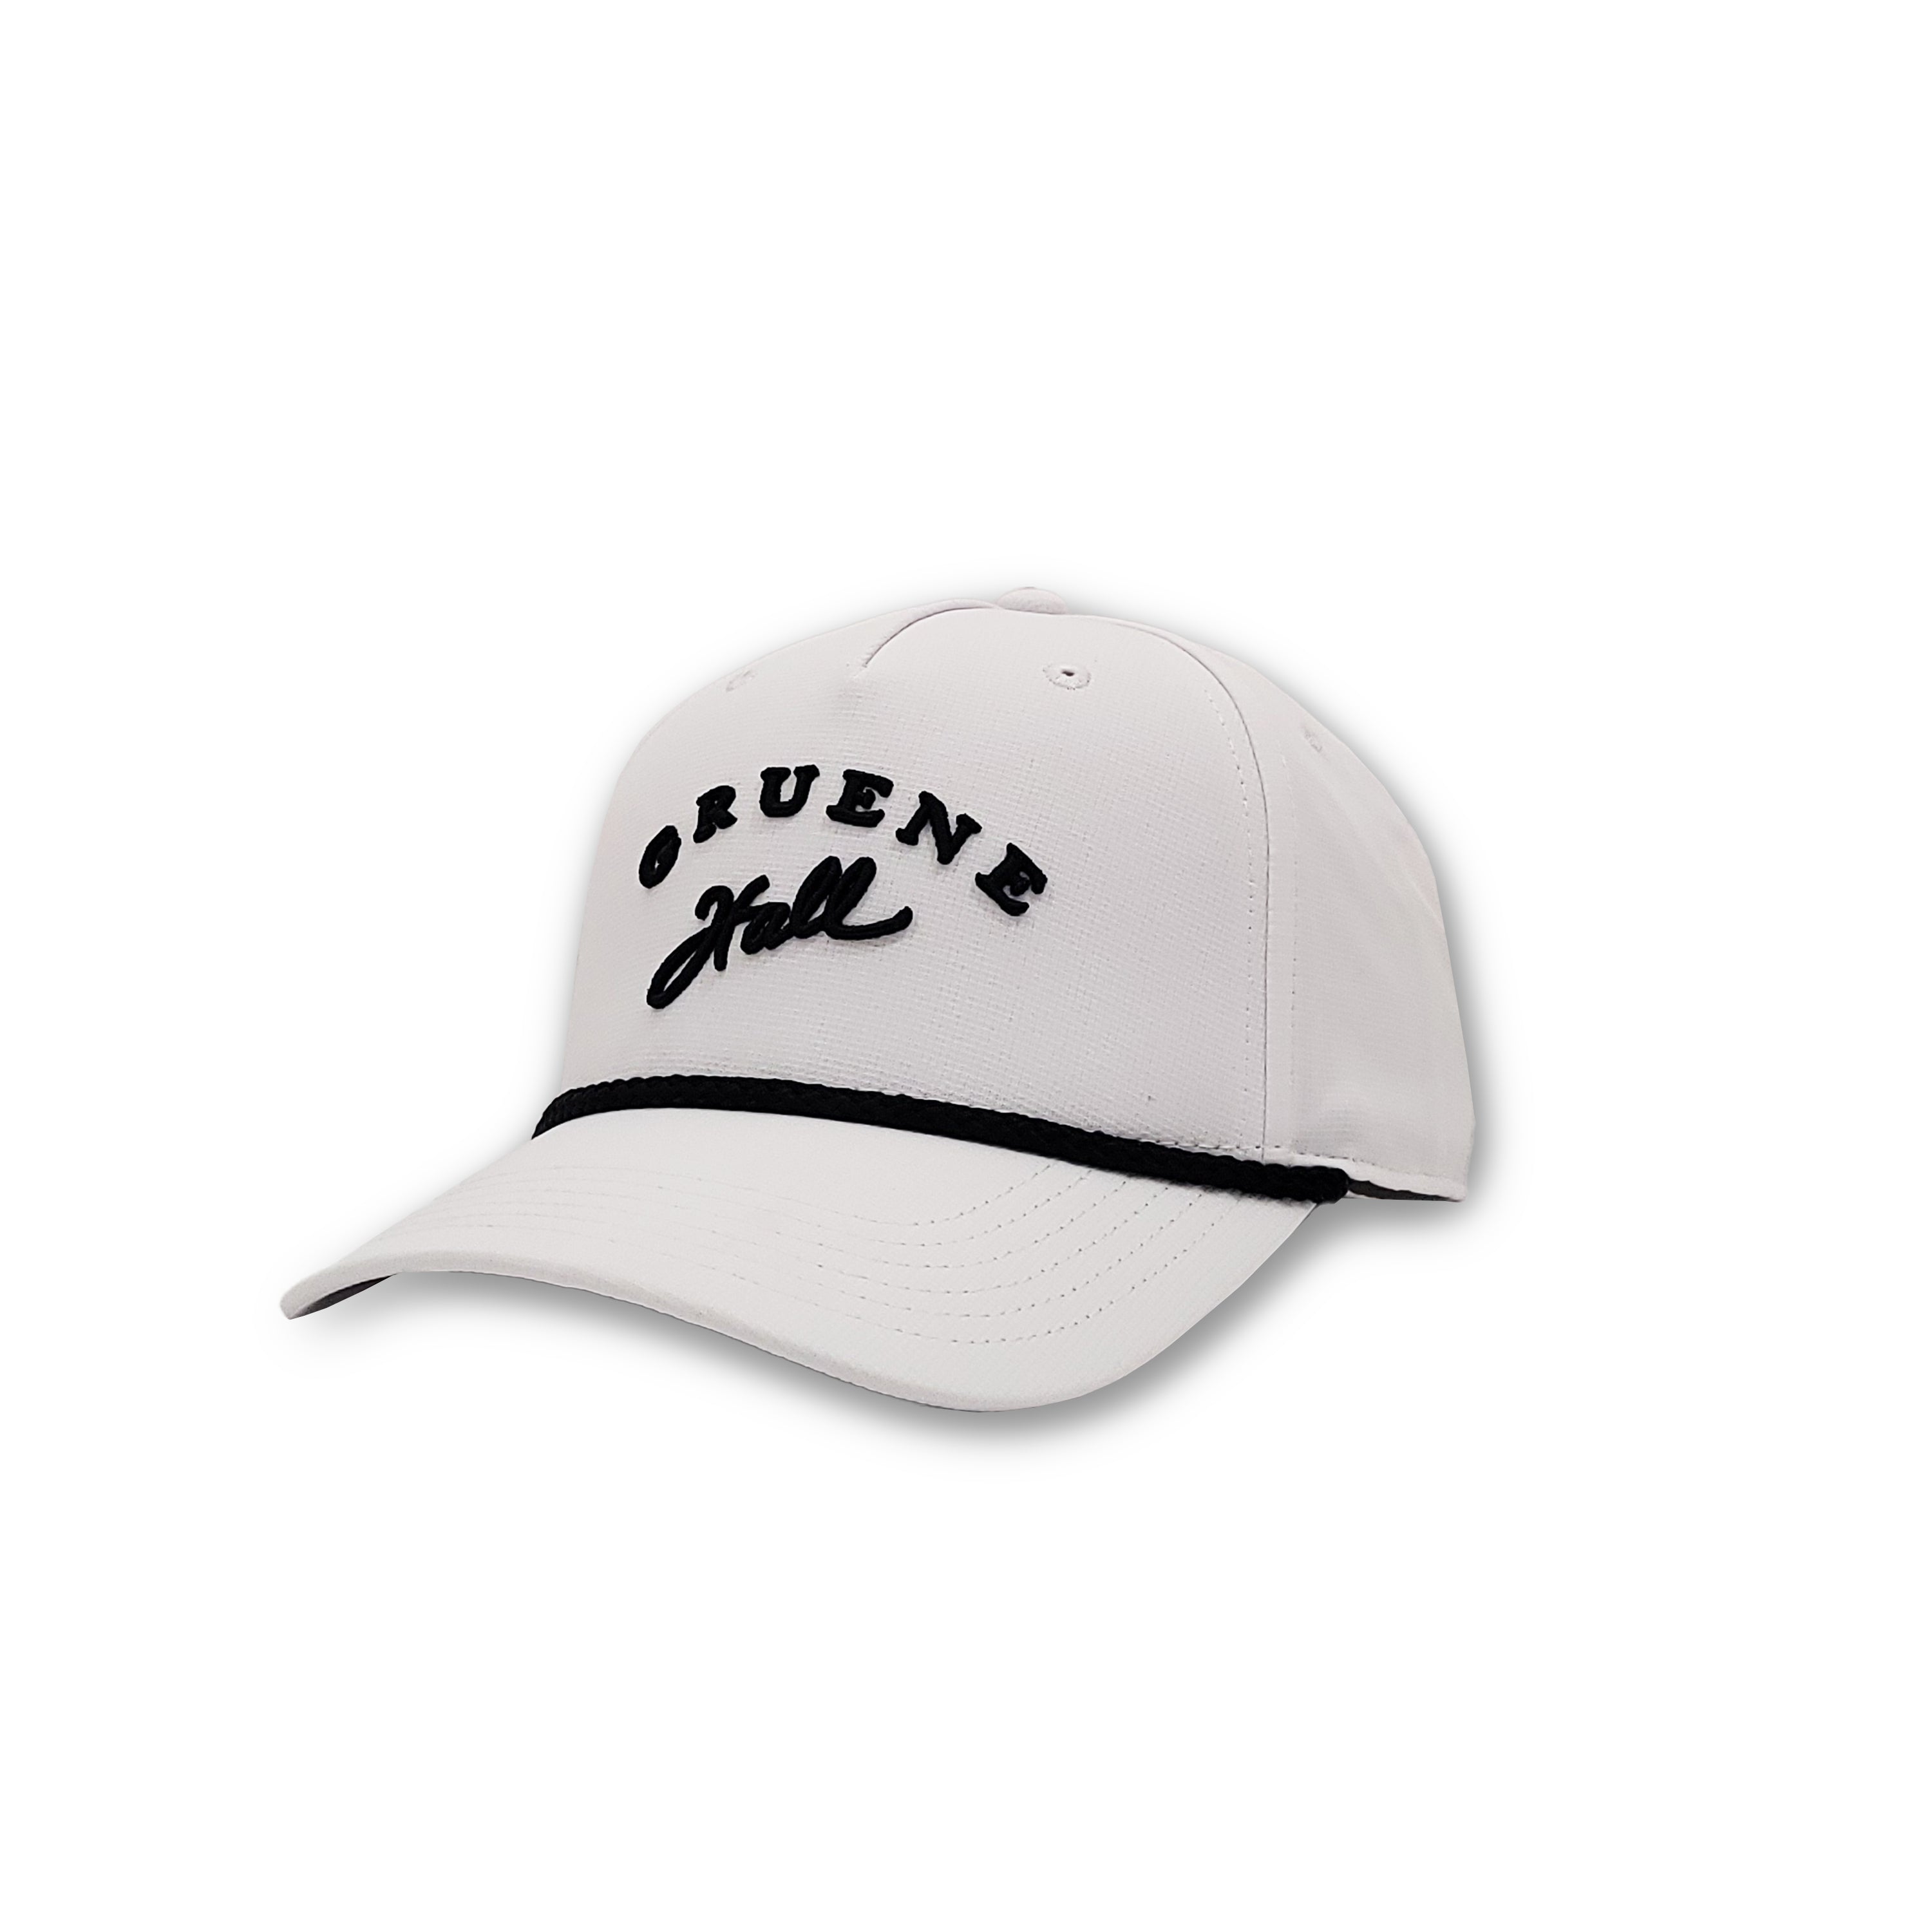 Gruene Hall logo golf hat